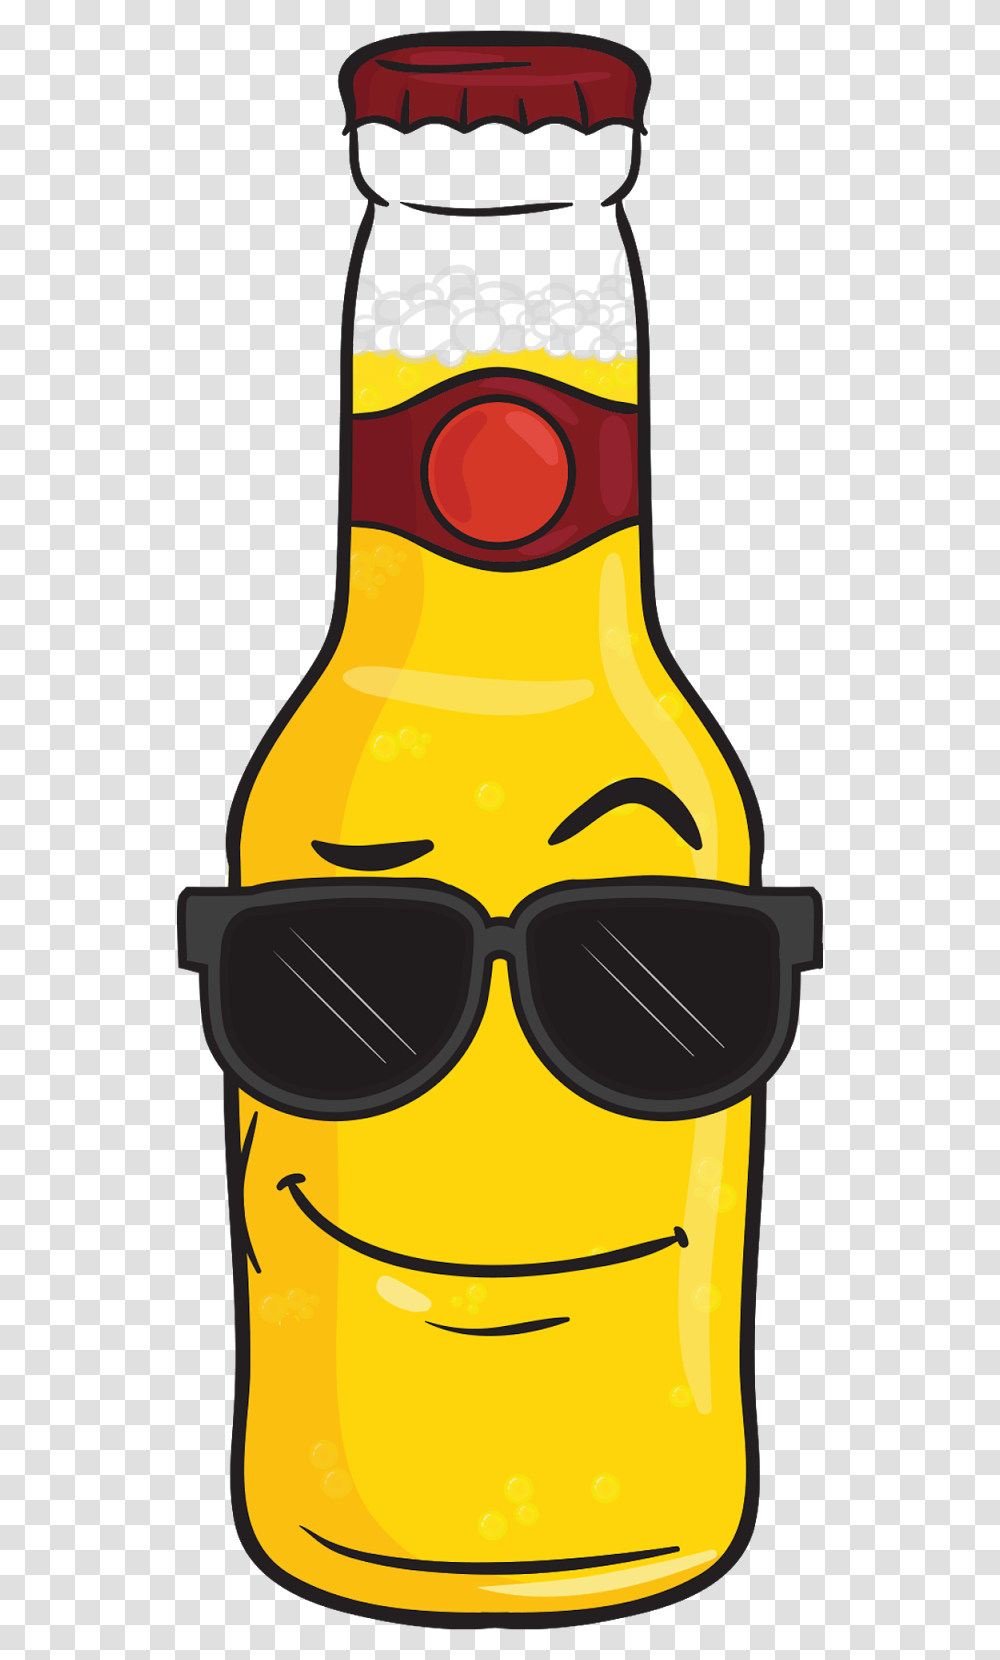 Upcoming Jacksonville Craft Beer Events Cartoon Beer Bottle, Label, Sunglasses, Accessories Transparent Png